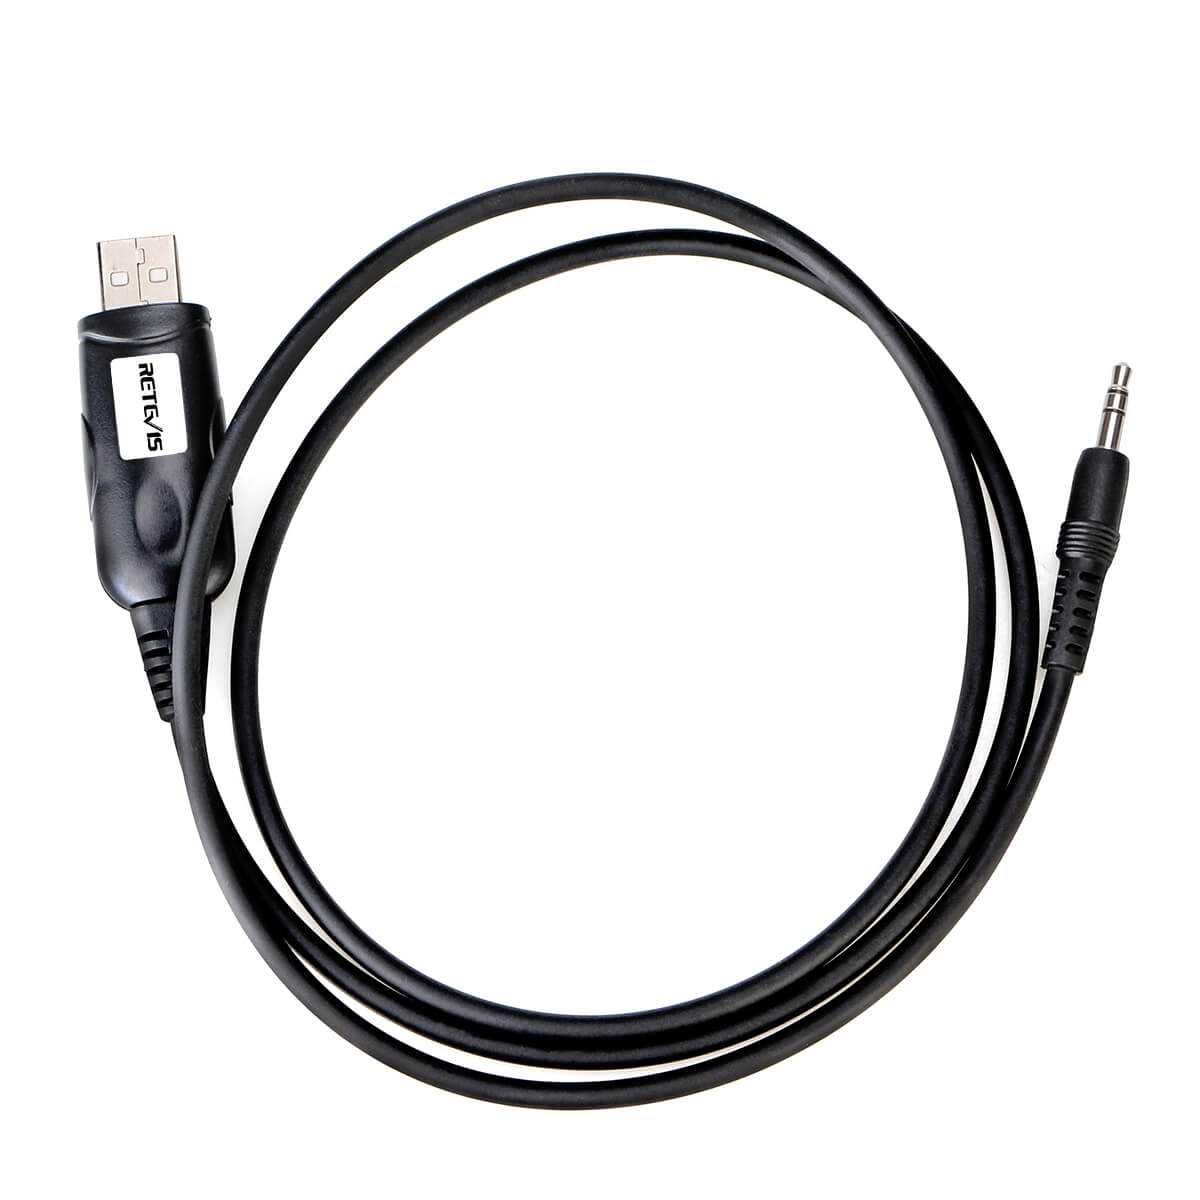 Original USB Programming Cable for Retevis RT98